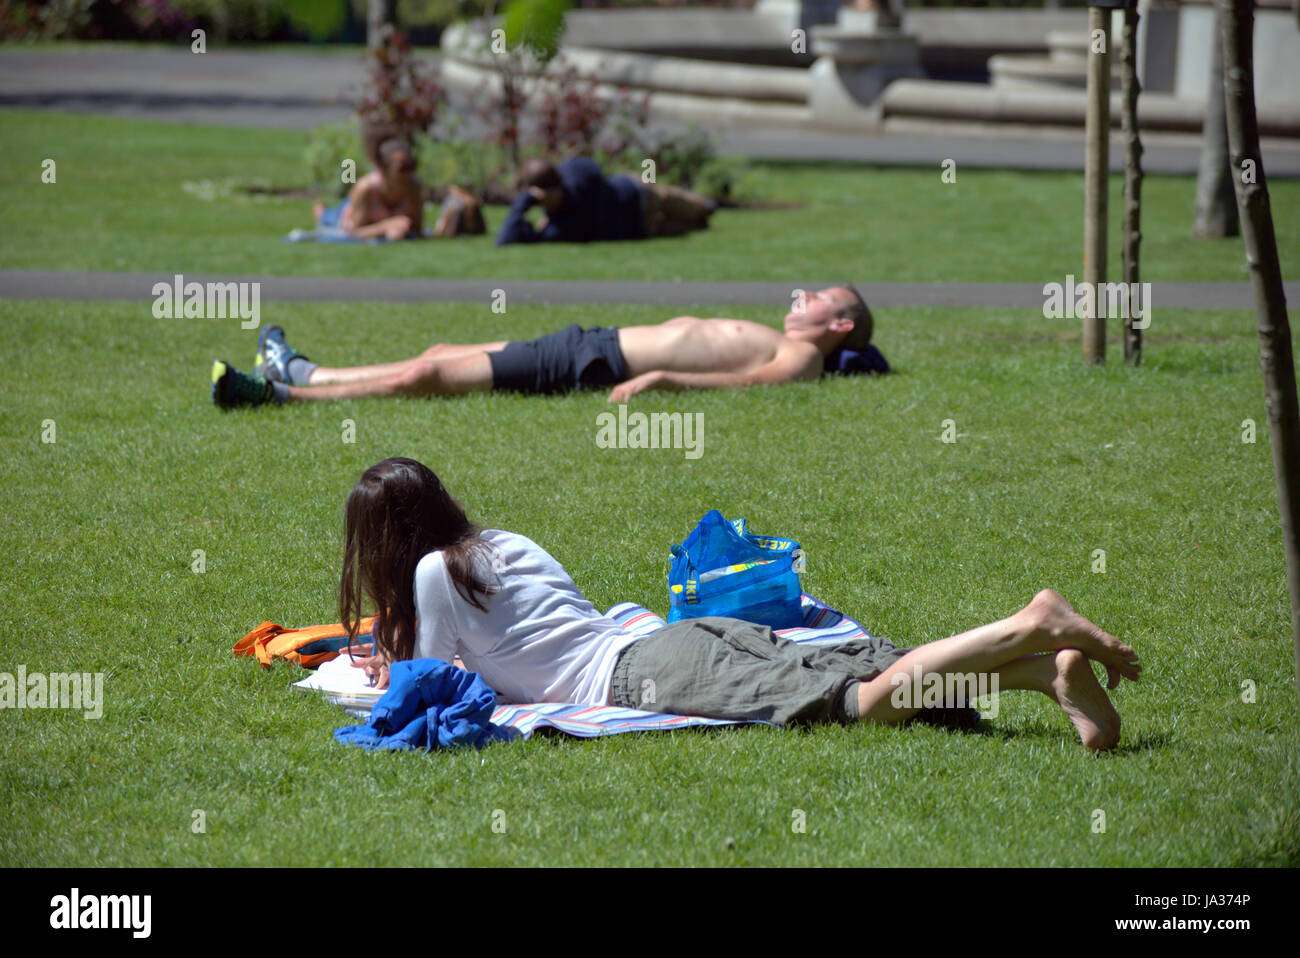 Glasgow Kelvingrove park scenes sunbathing Stock Photo